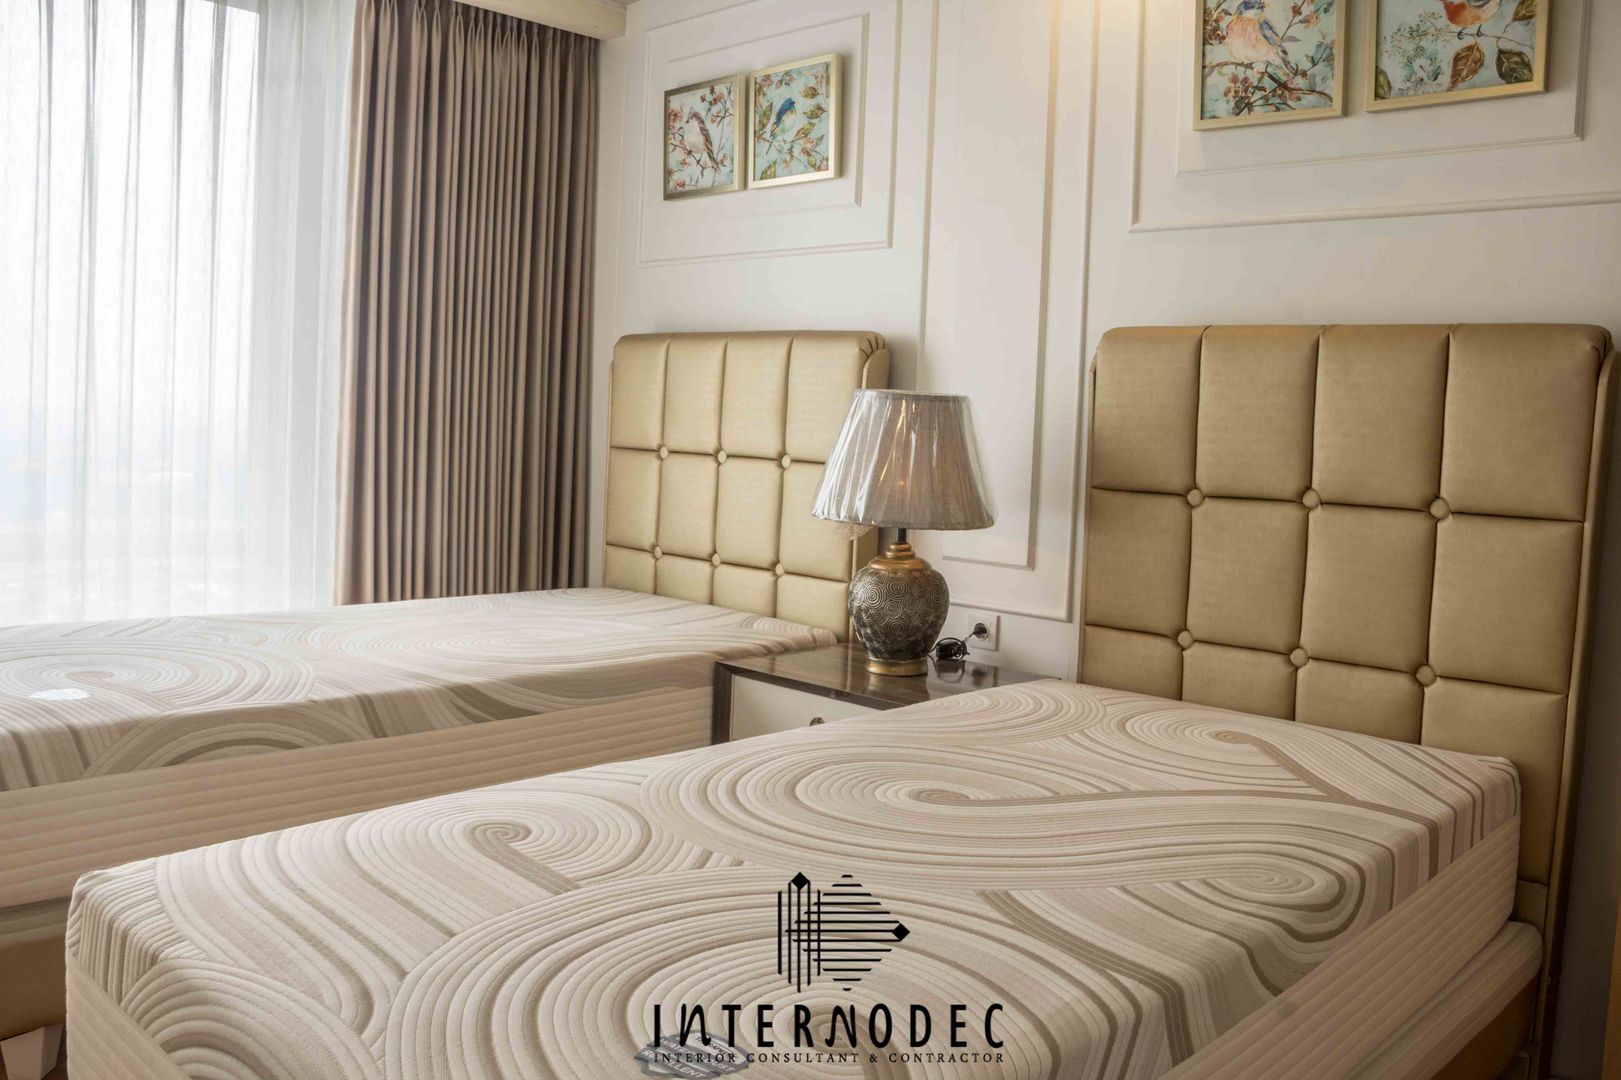 Classic & Luxurious Apartment Mrs. CS, Internodec Internodec Dormitorios de estilo clásico